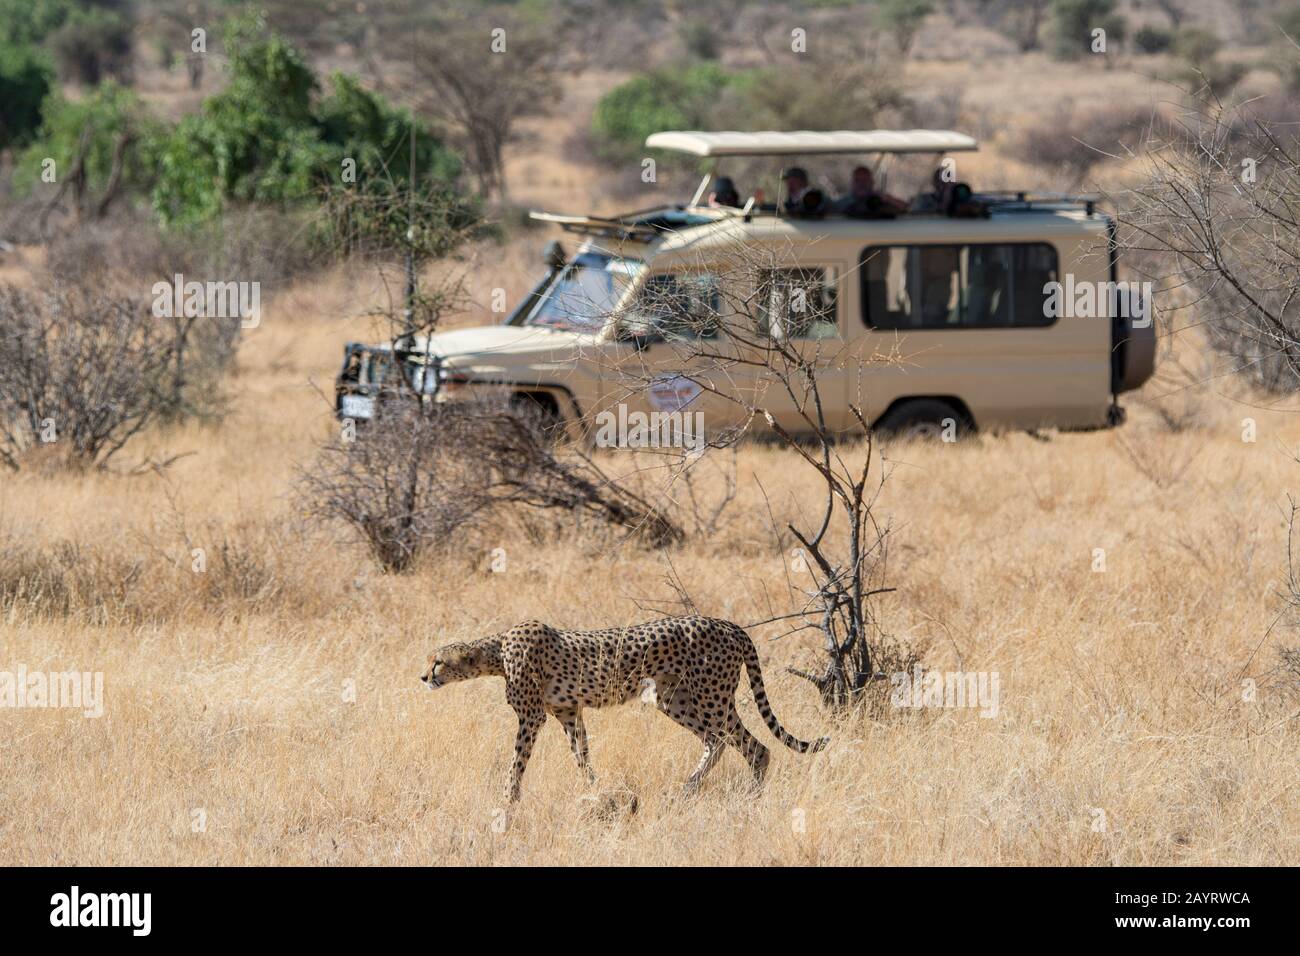 A Cheetah (Acinonyx jubatus) with a safari vehicle in the background in the Samburu National Reserve in Kenya. Stock Photo